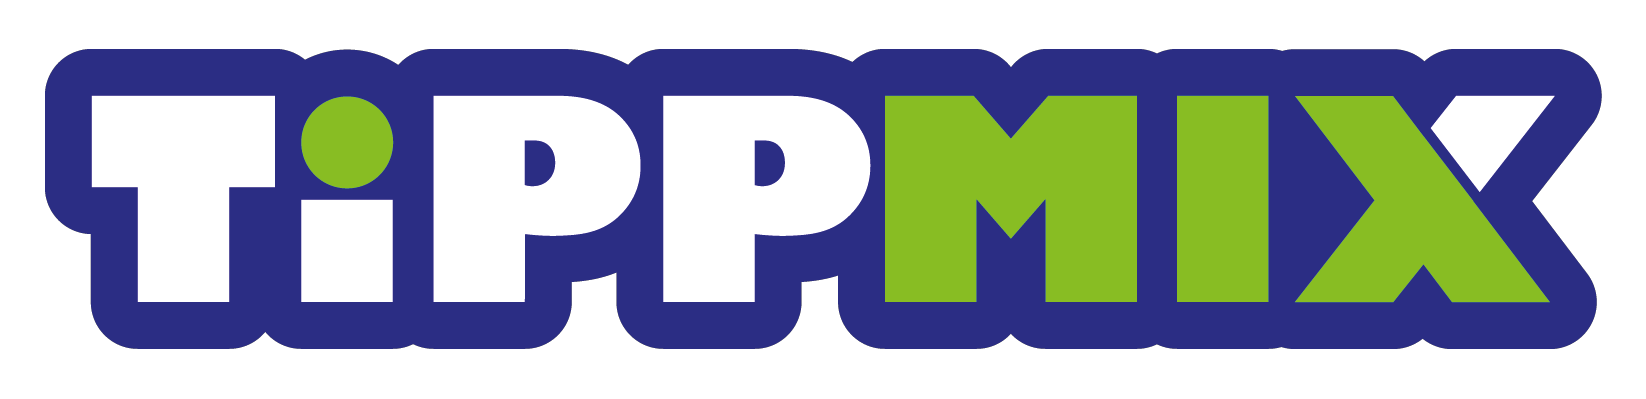 TippMix Pro logó